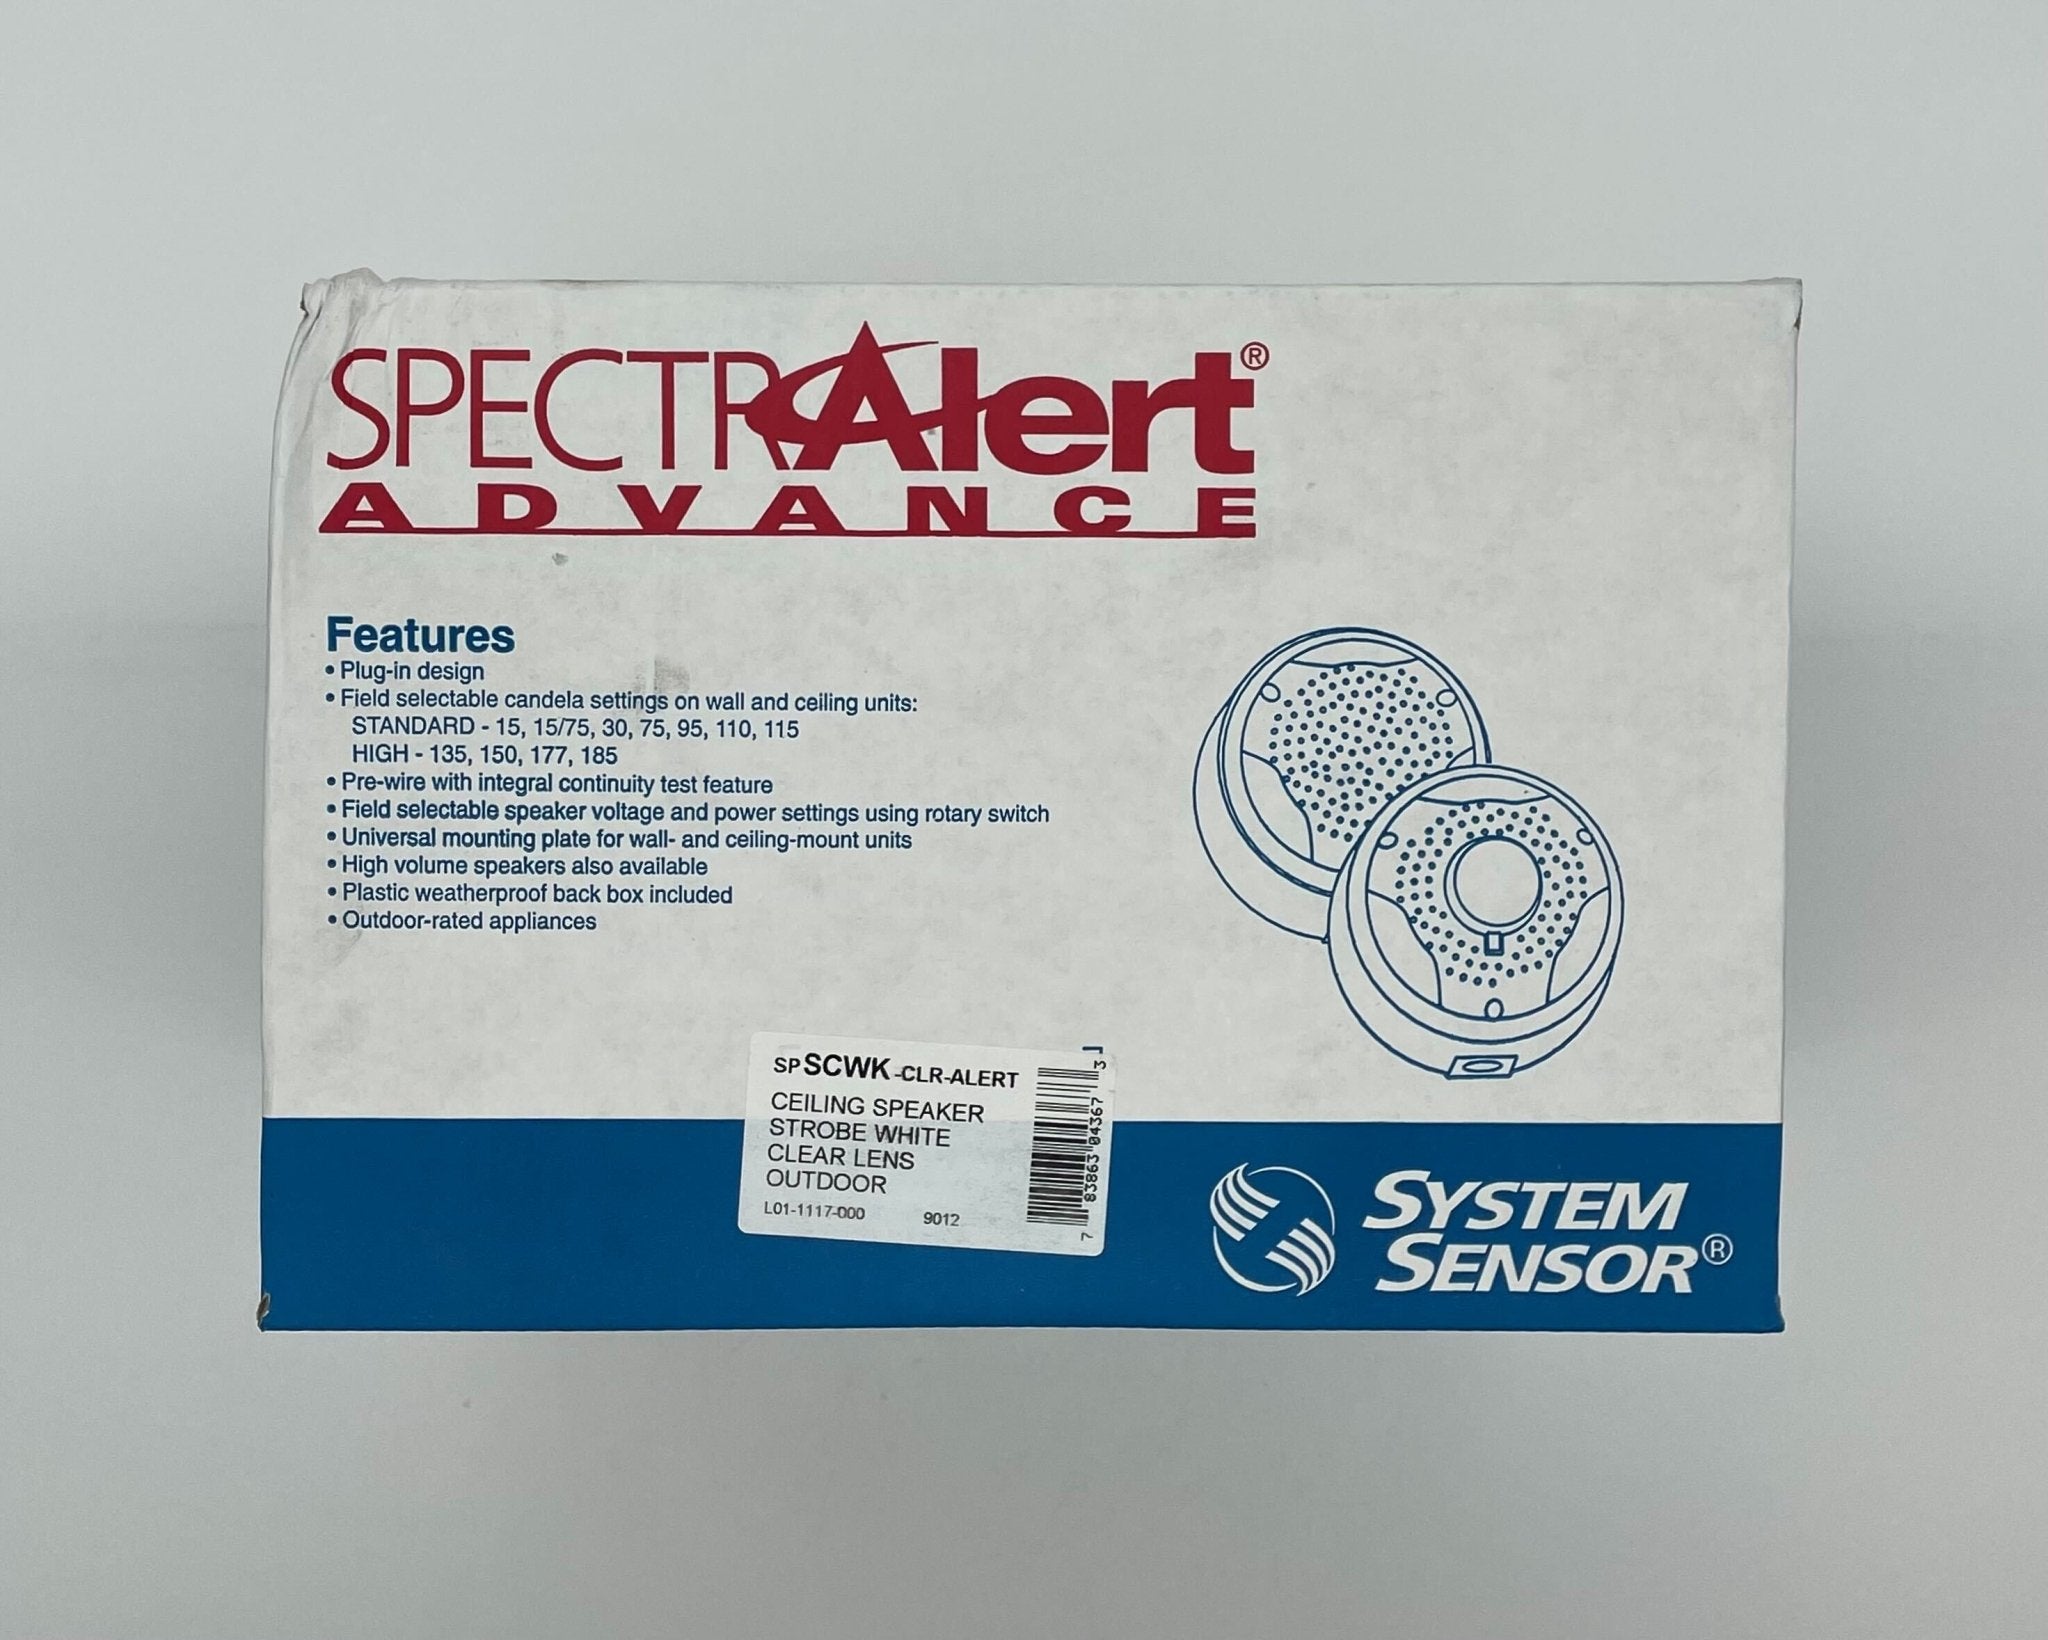 System Sensor SPSCWK-CLR-ALERT - The Fire Alarm Supplier